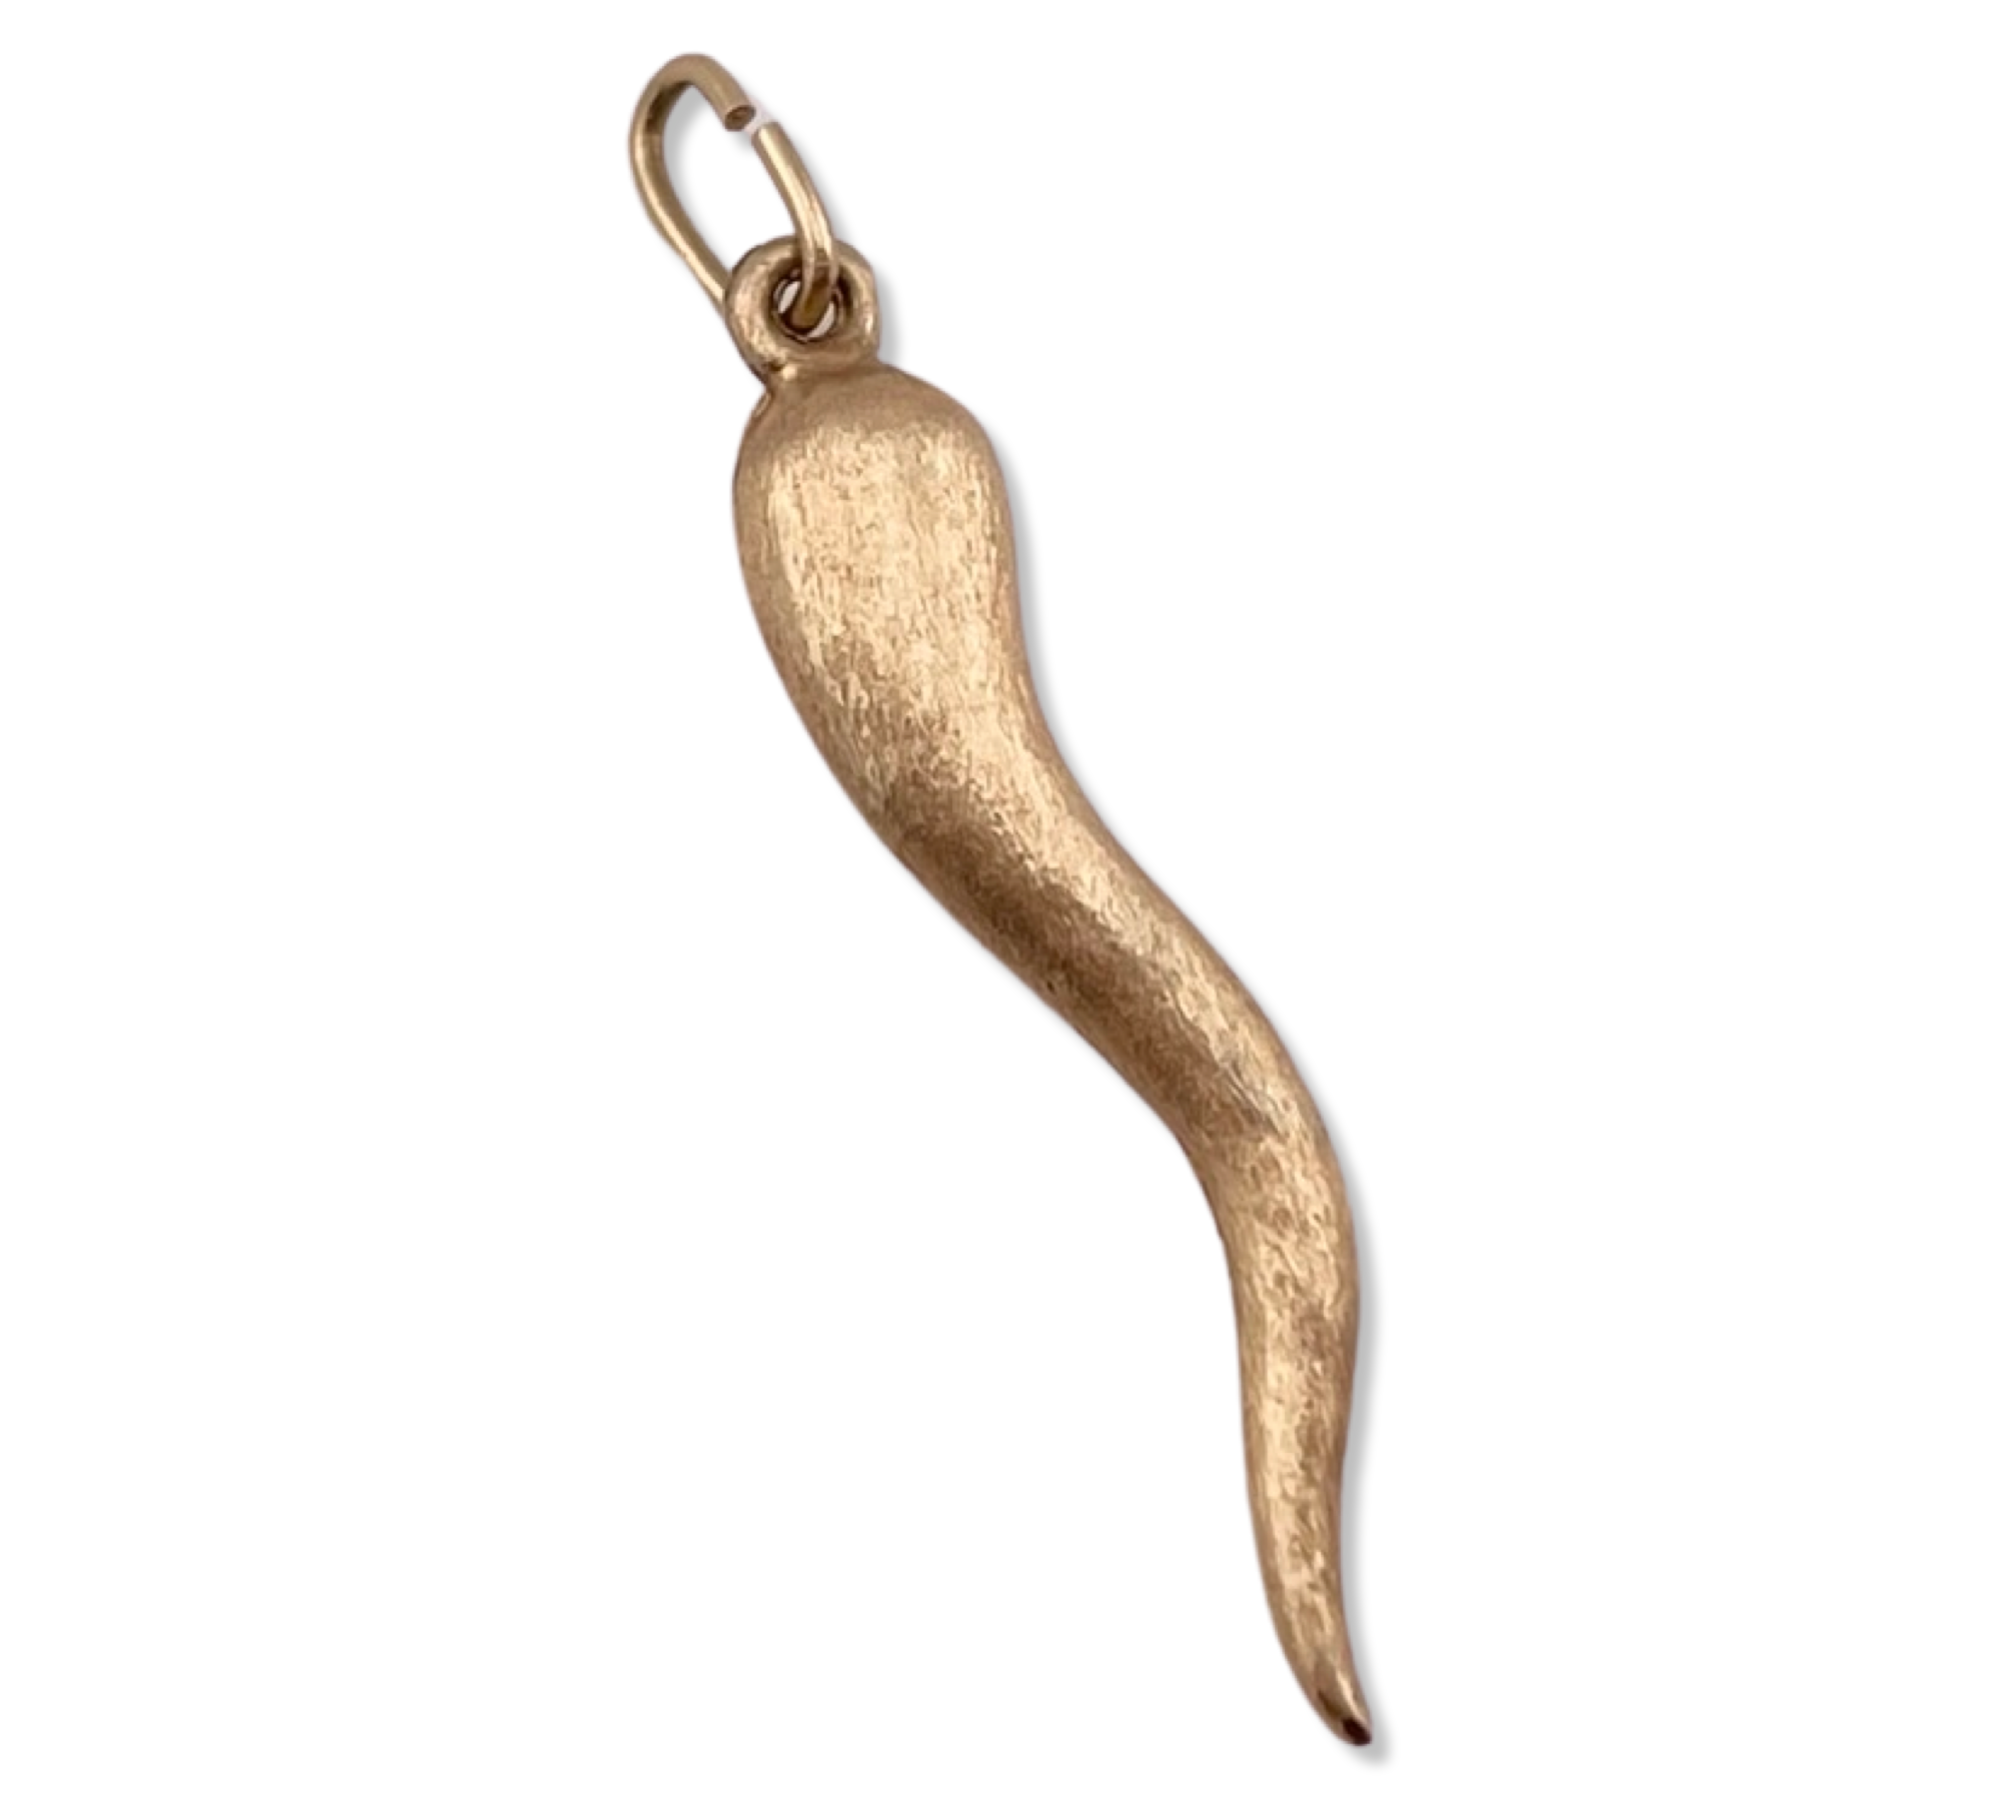 14k gold Italian horn brushed finish pendant